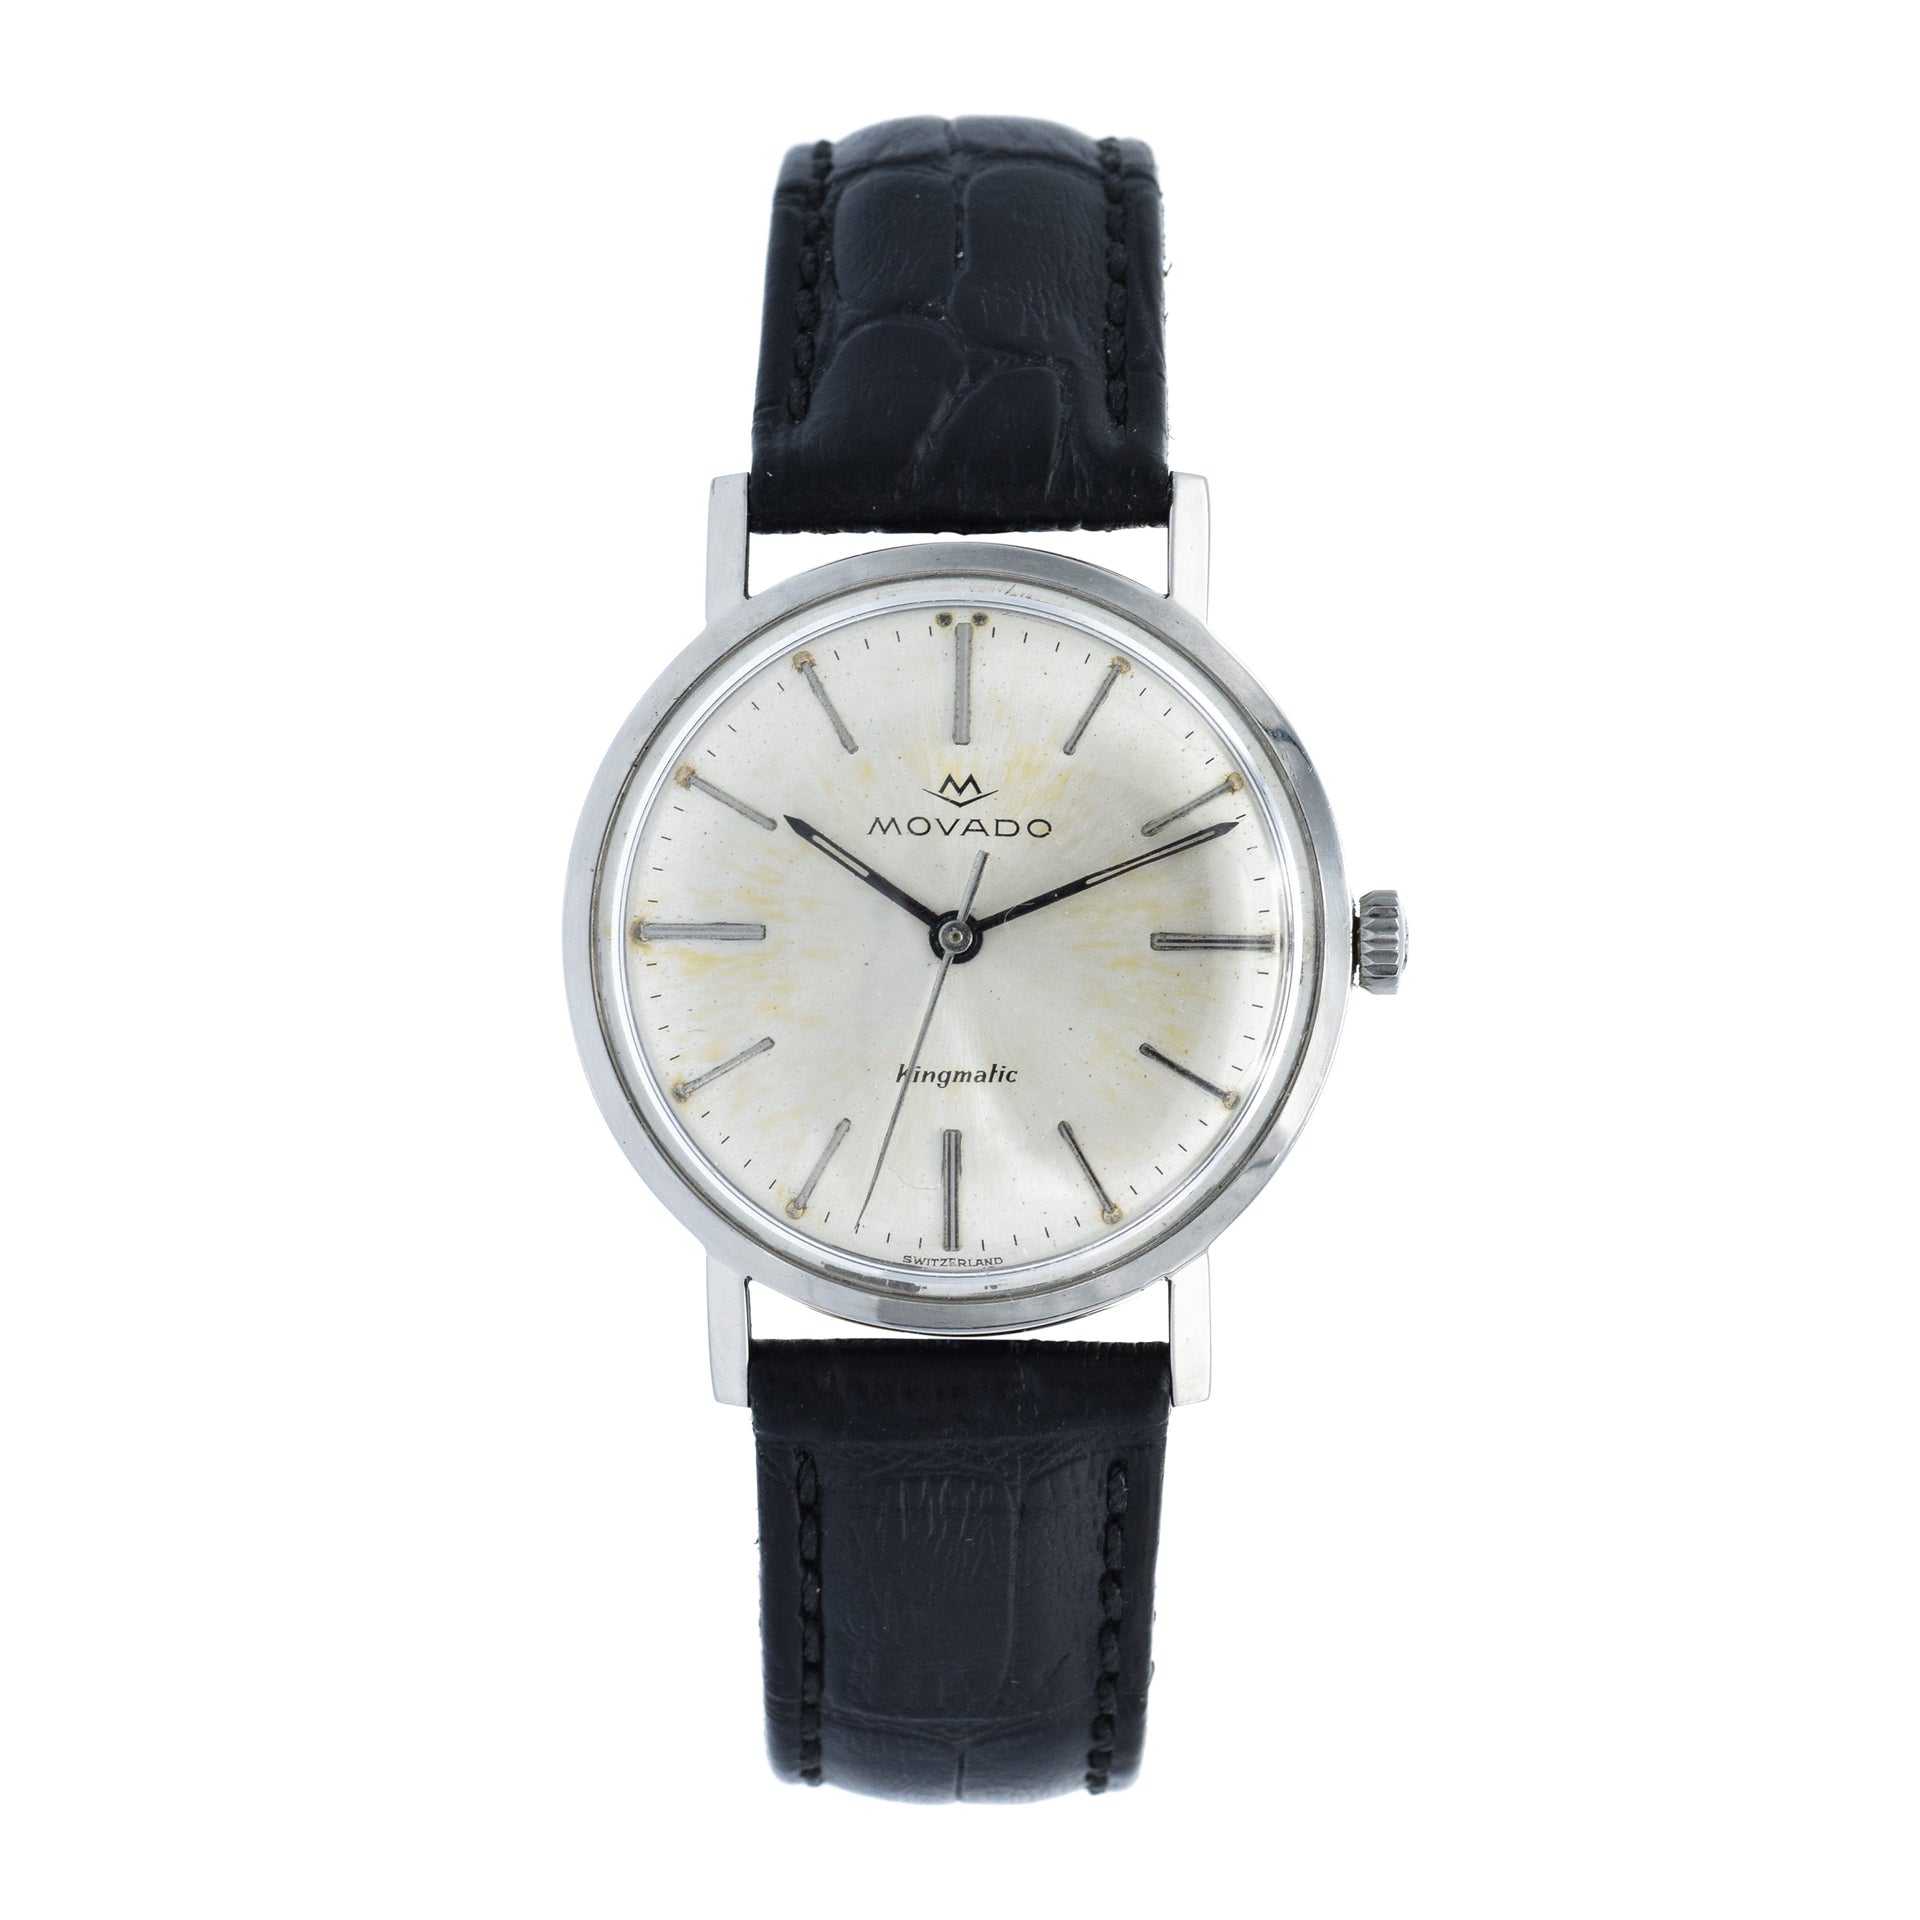 Vintage Movado Kingmatic Watch